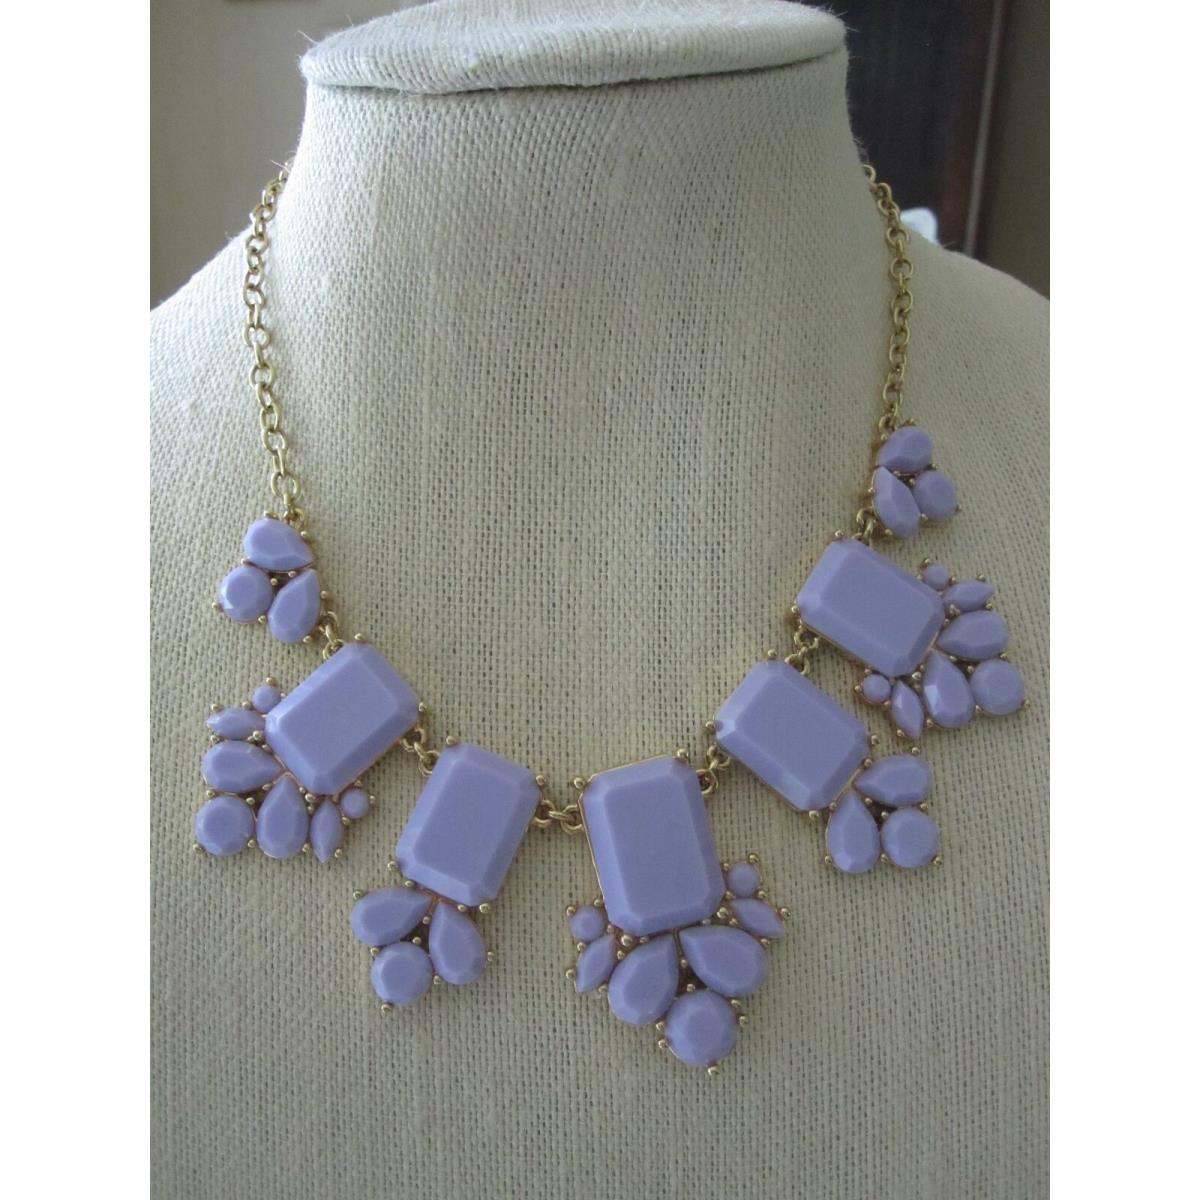 Kate Spade Beautiful Daylight Jewels Necklace- Lavender WBRU9649